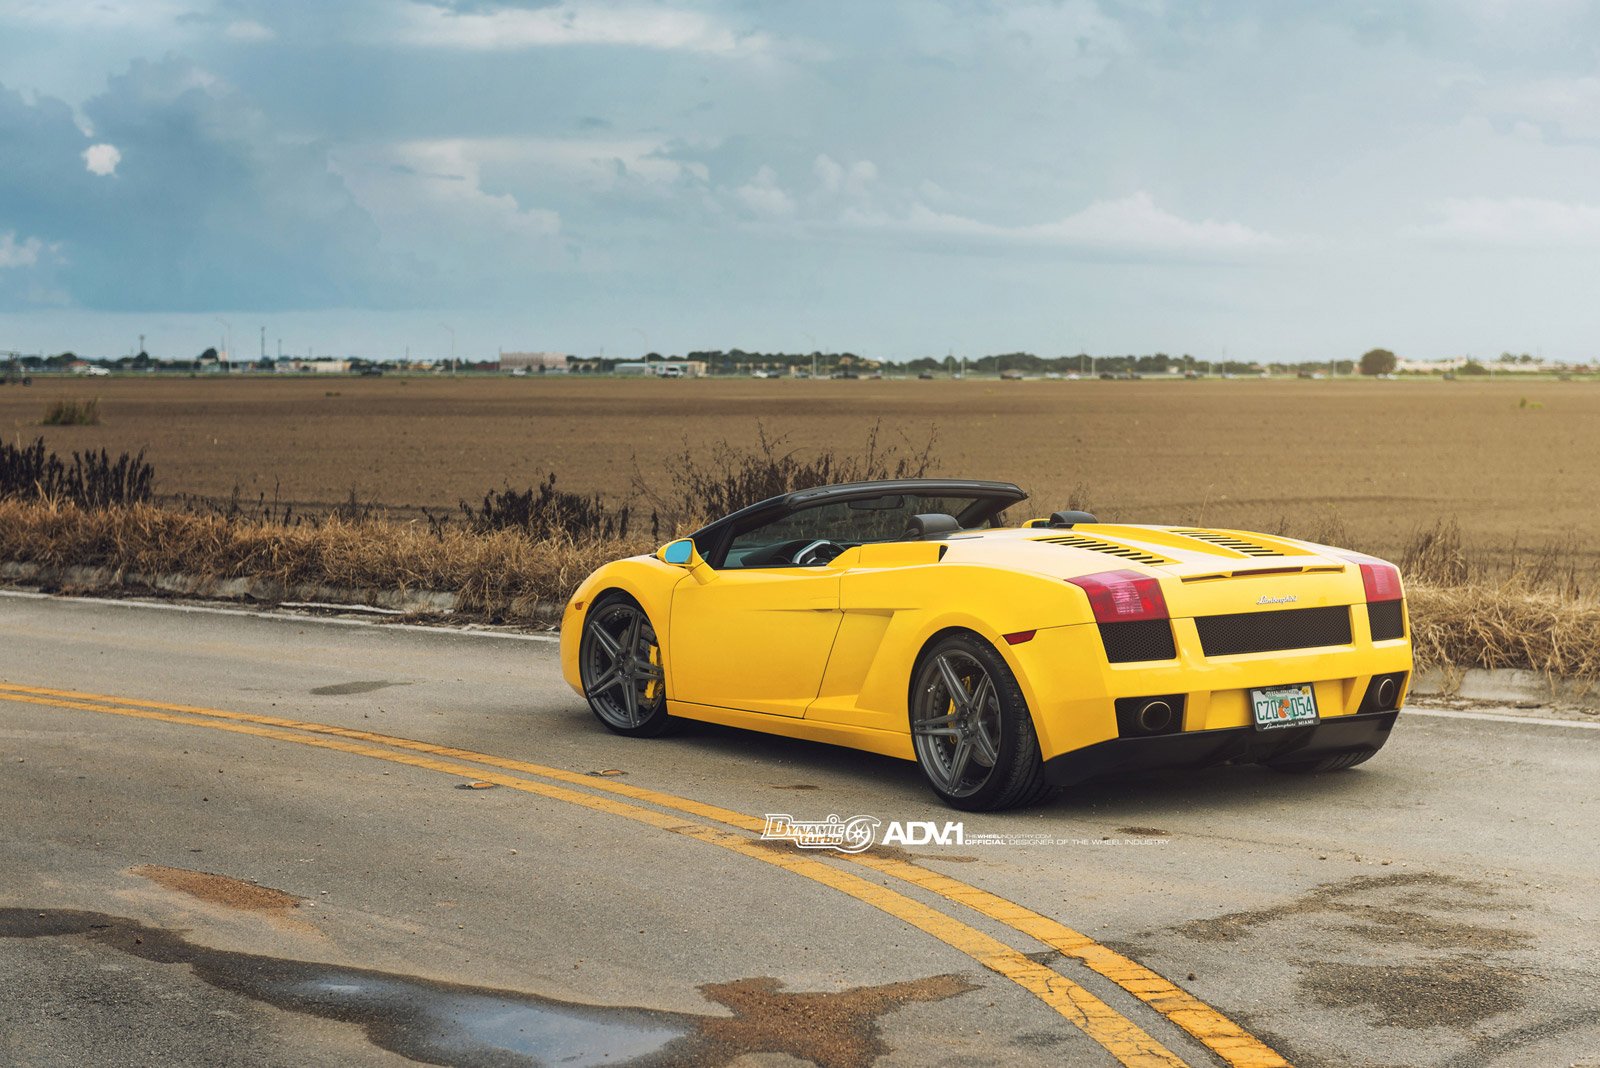 2014, Adv1, Wheels, Lamborghini, Gallardo, Spider, Supercars Wallpaper